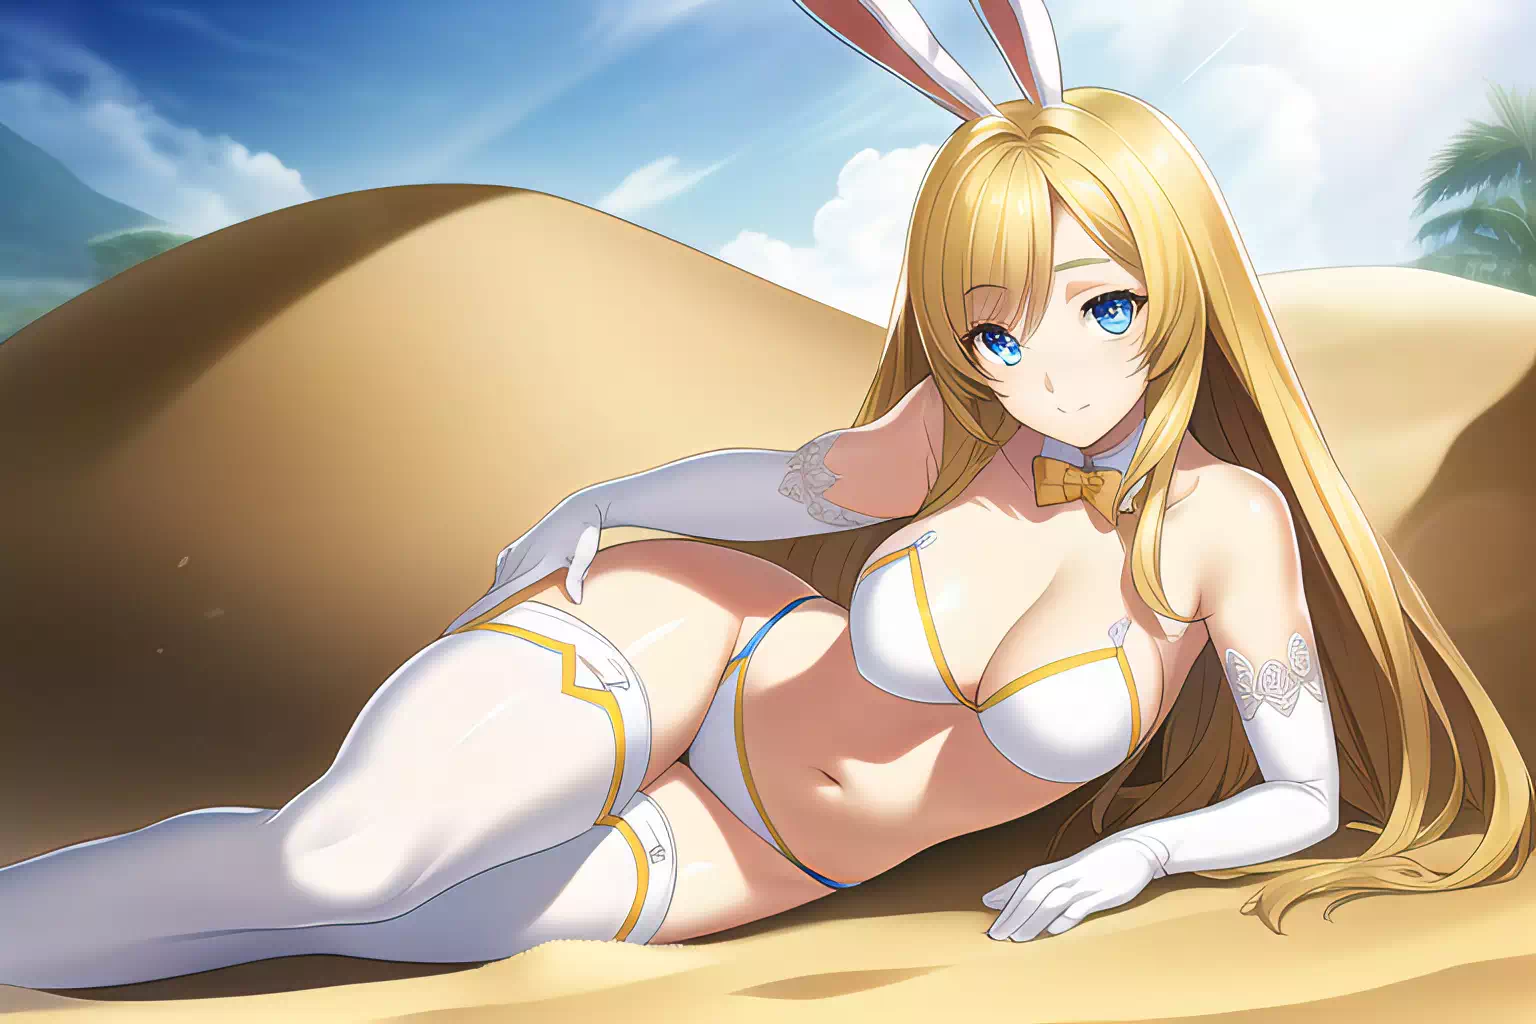 Bunnygirl on sand